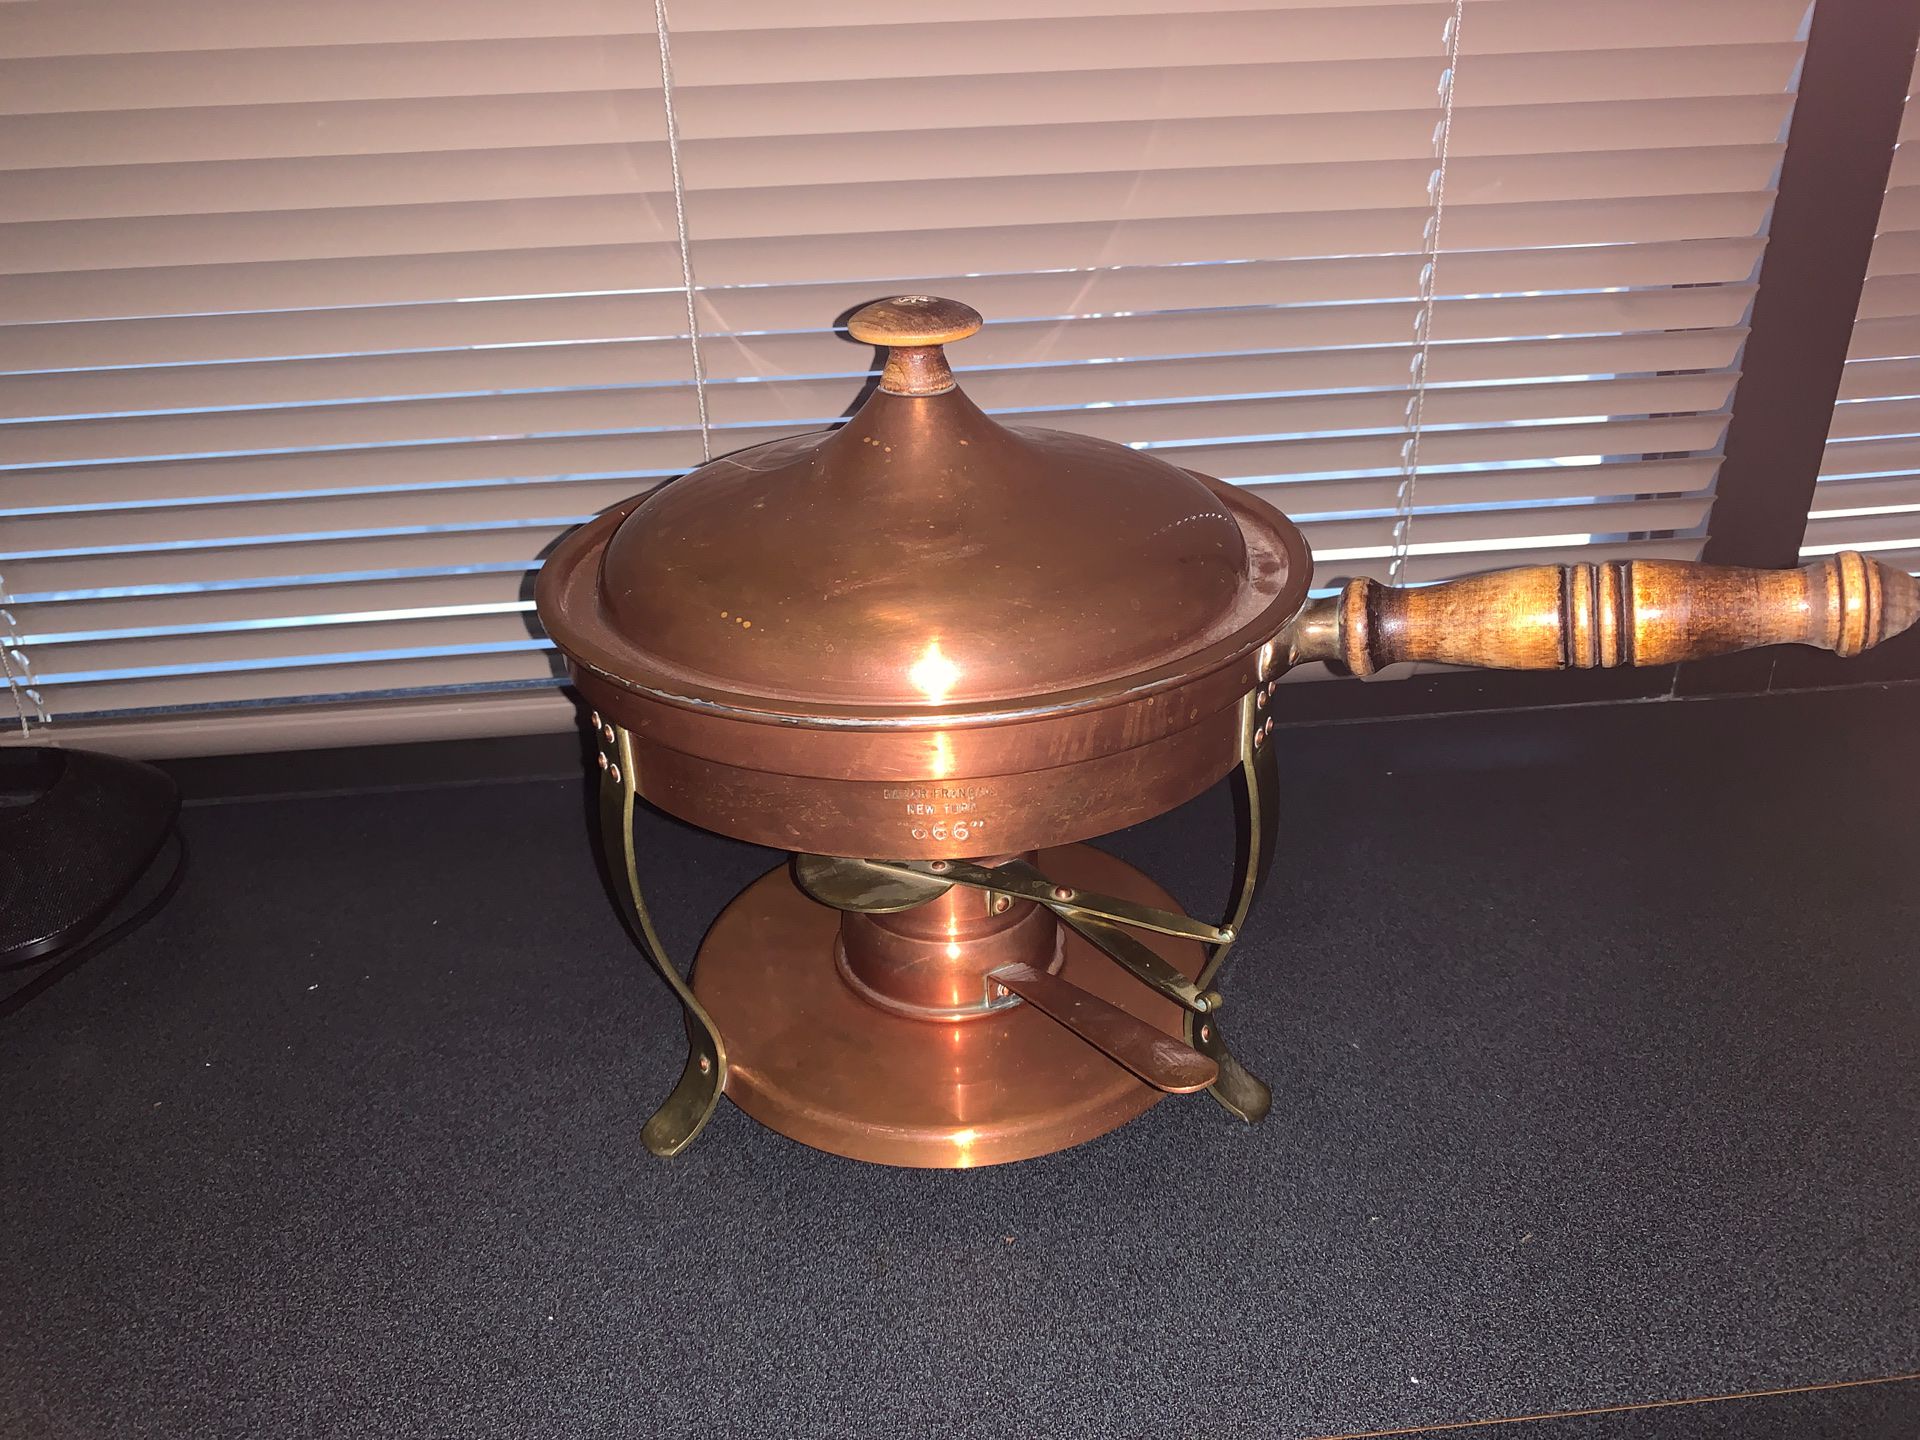 Vintage Bazar Francois “666” Copper chafing pot with warmer